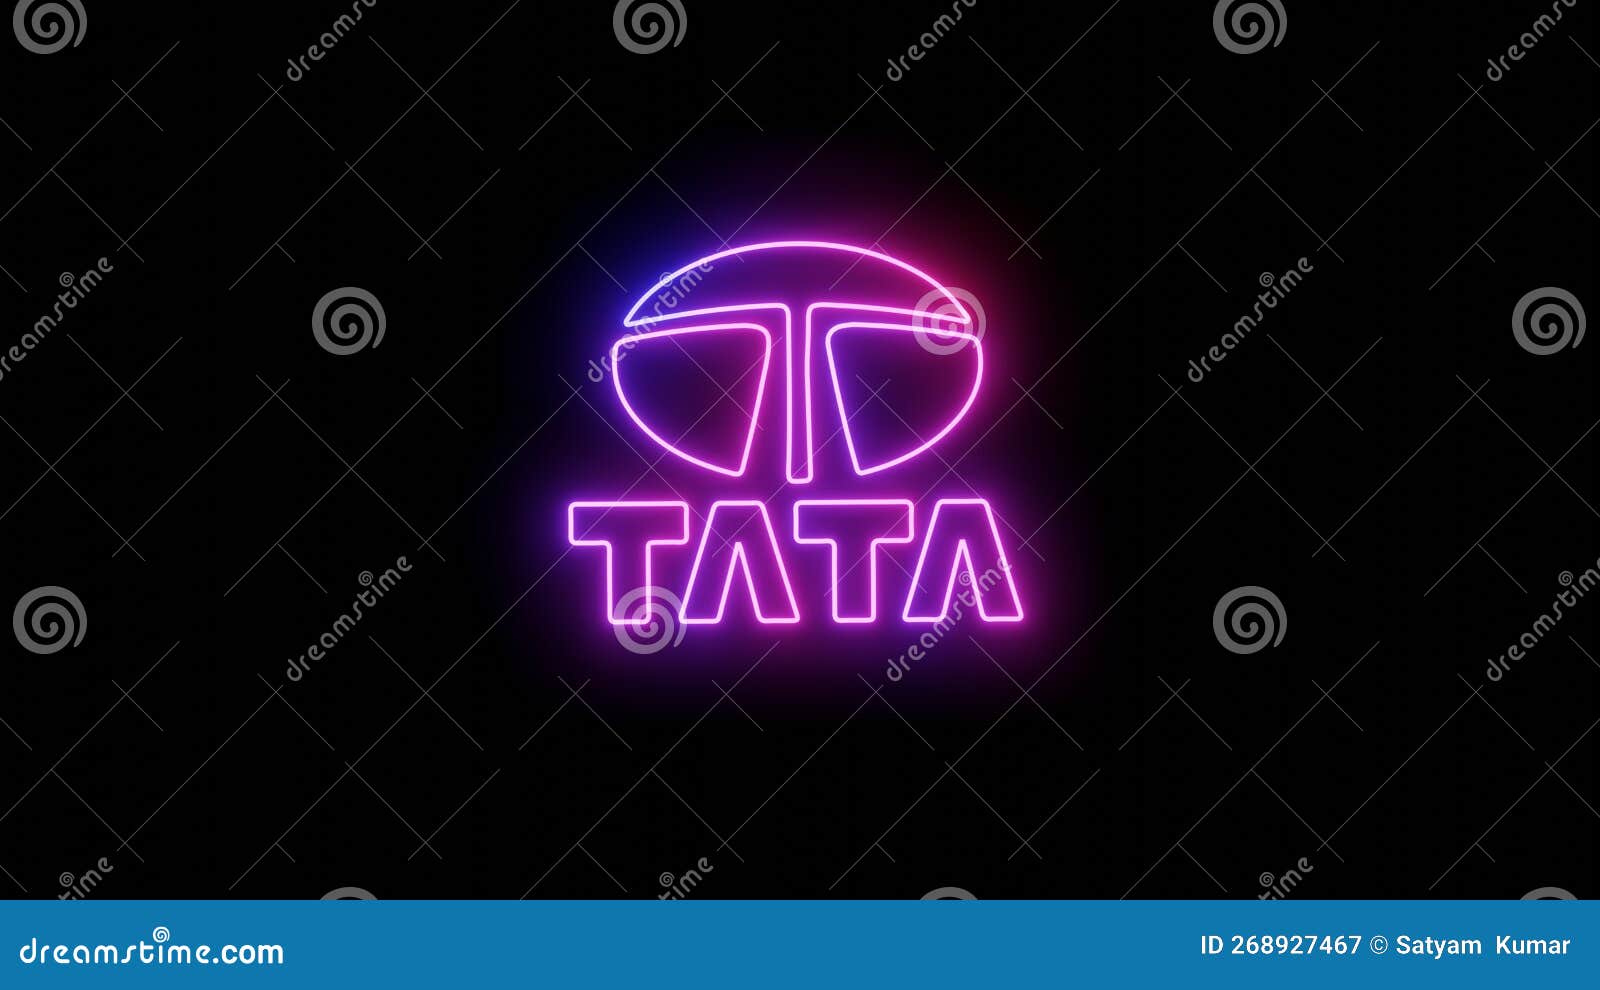 Tata Motors reveals Tata.ev, new brand identity for electric vehicles -  India Today